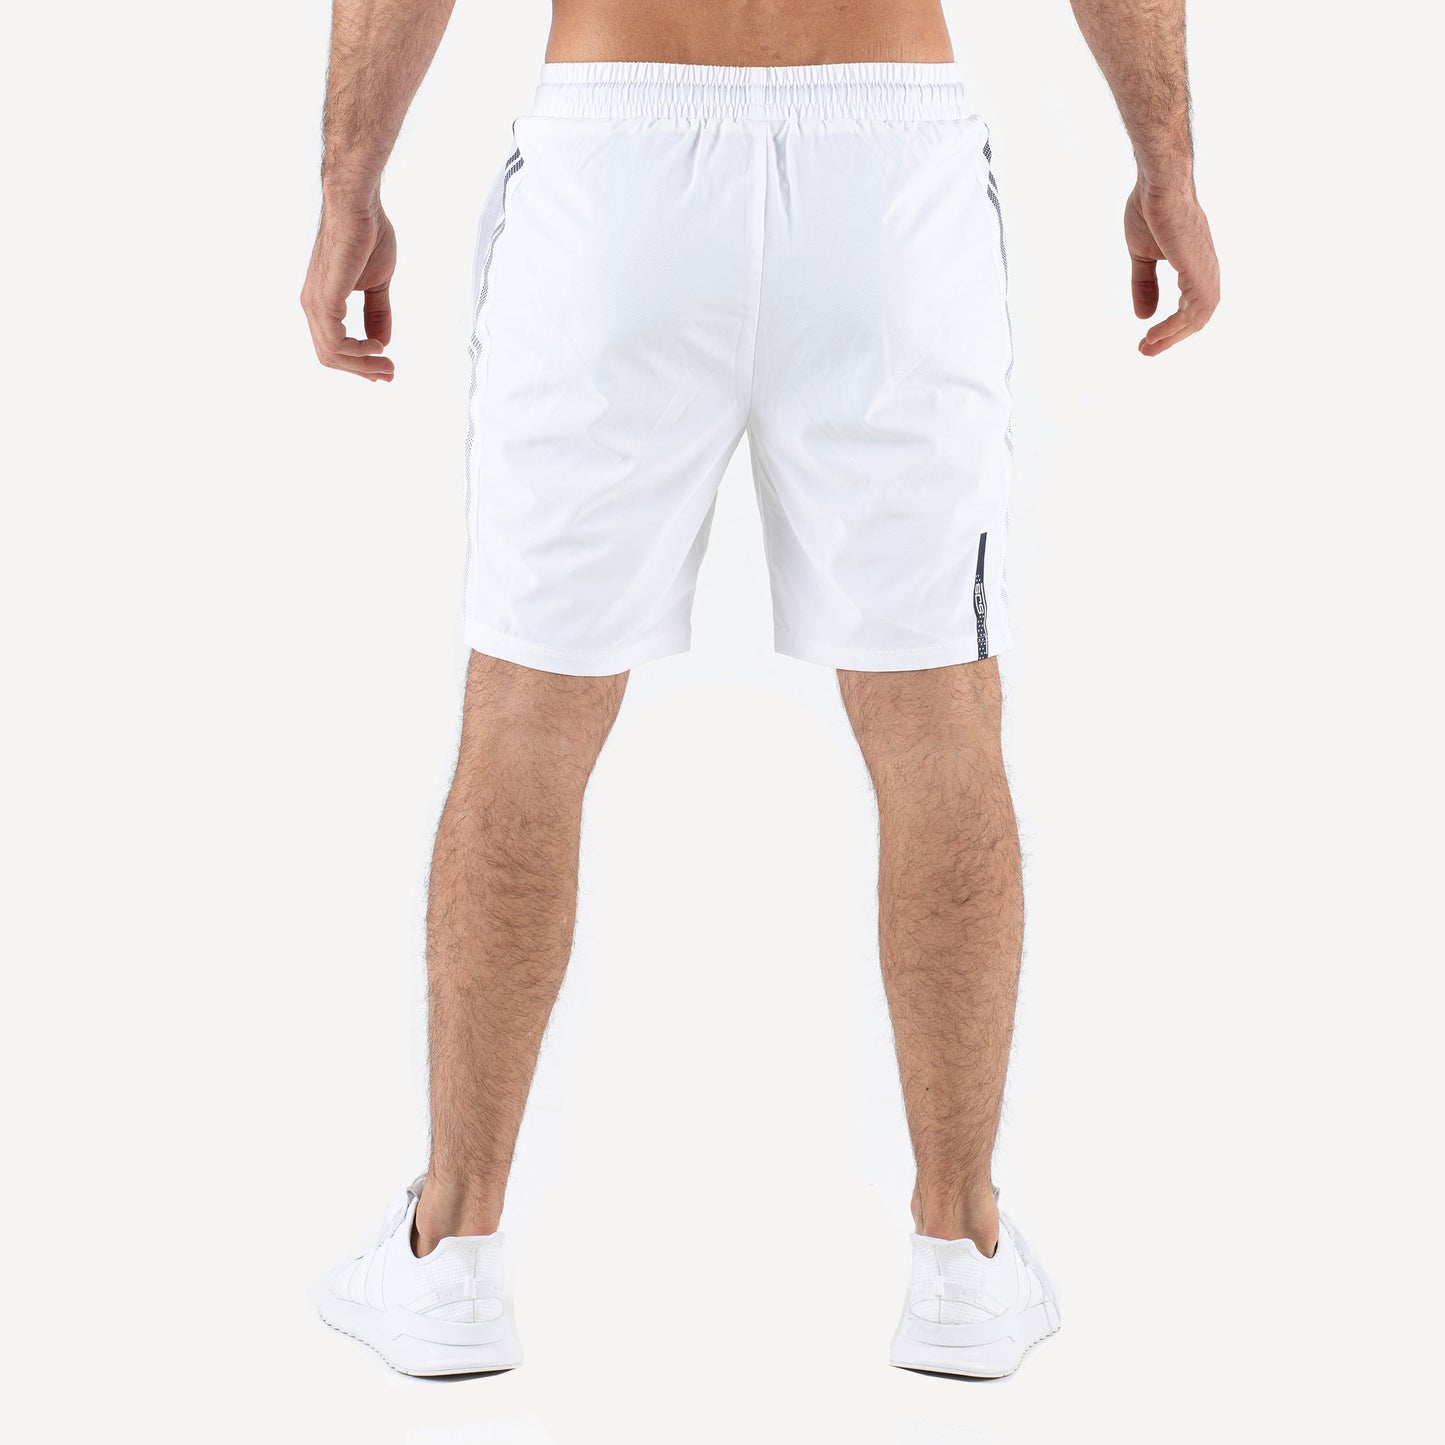 Sjeng Sports Shelby Men's Tennis Shorts White (2)